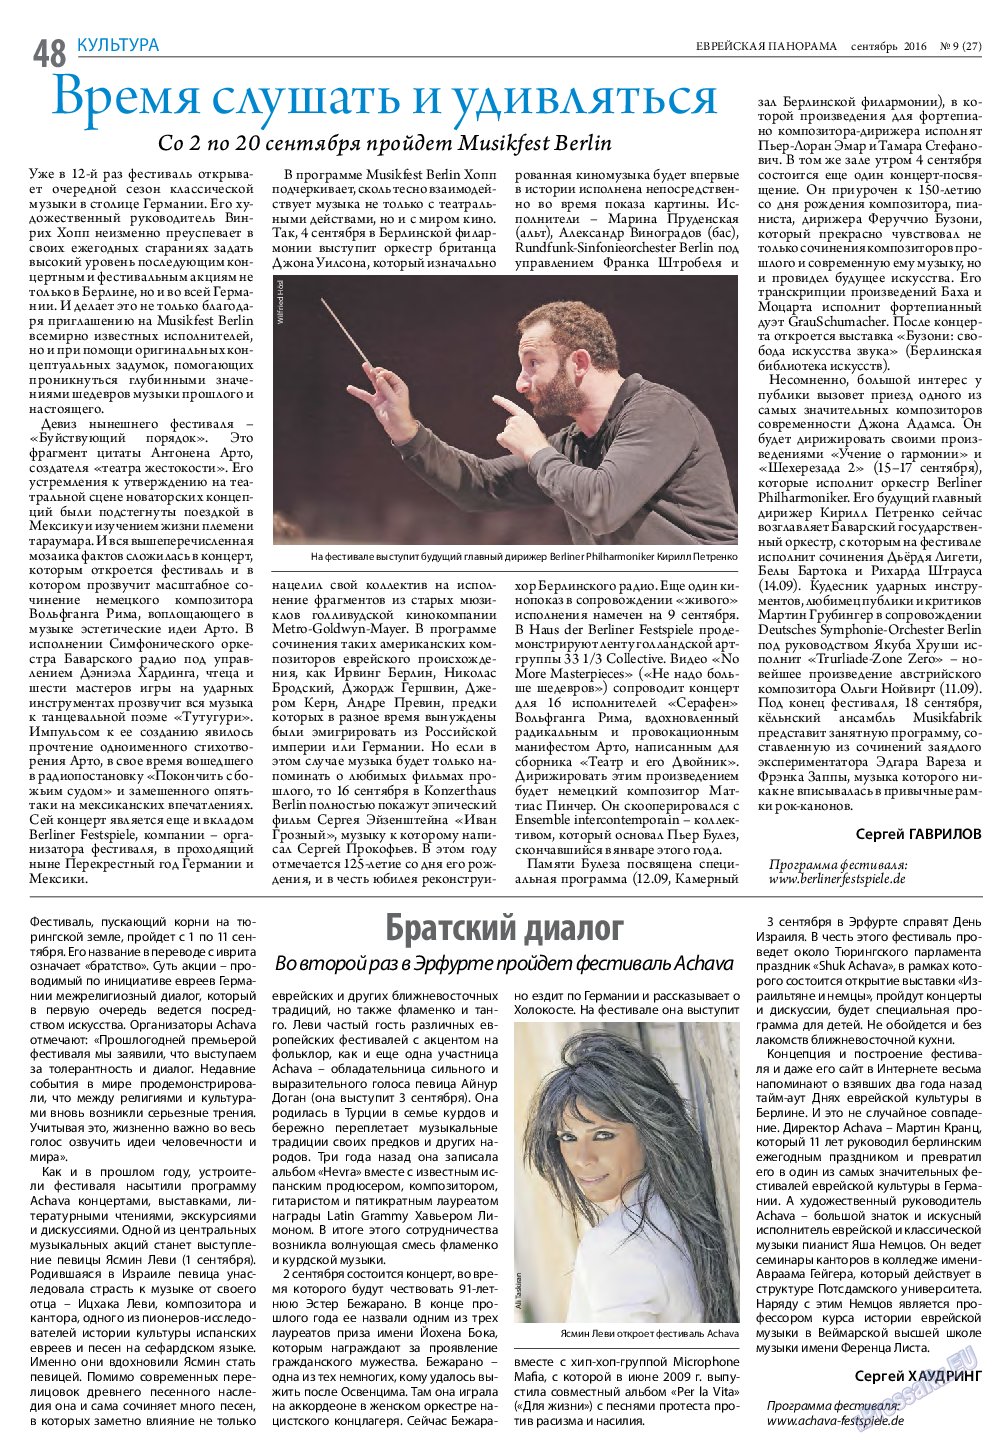 Еврейская панорама, газета. 2016 №9 стр.48